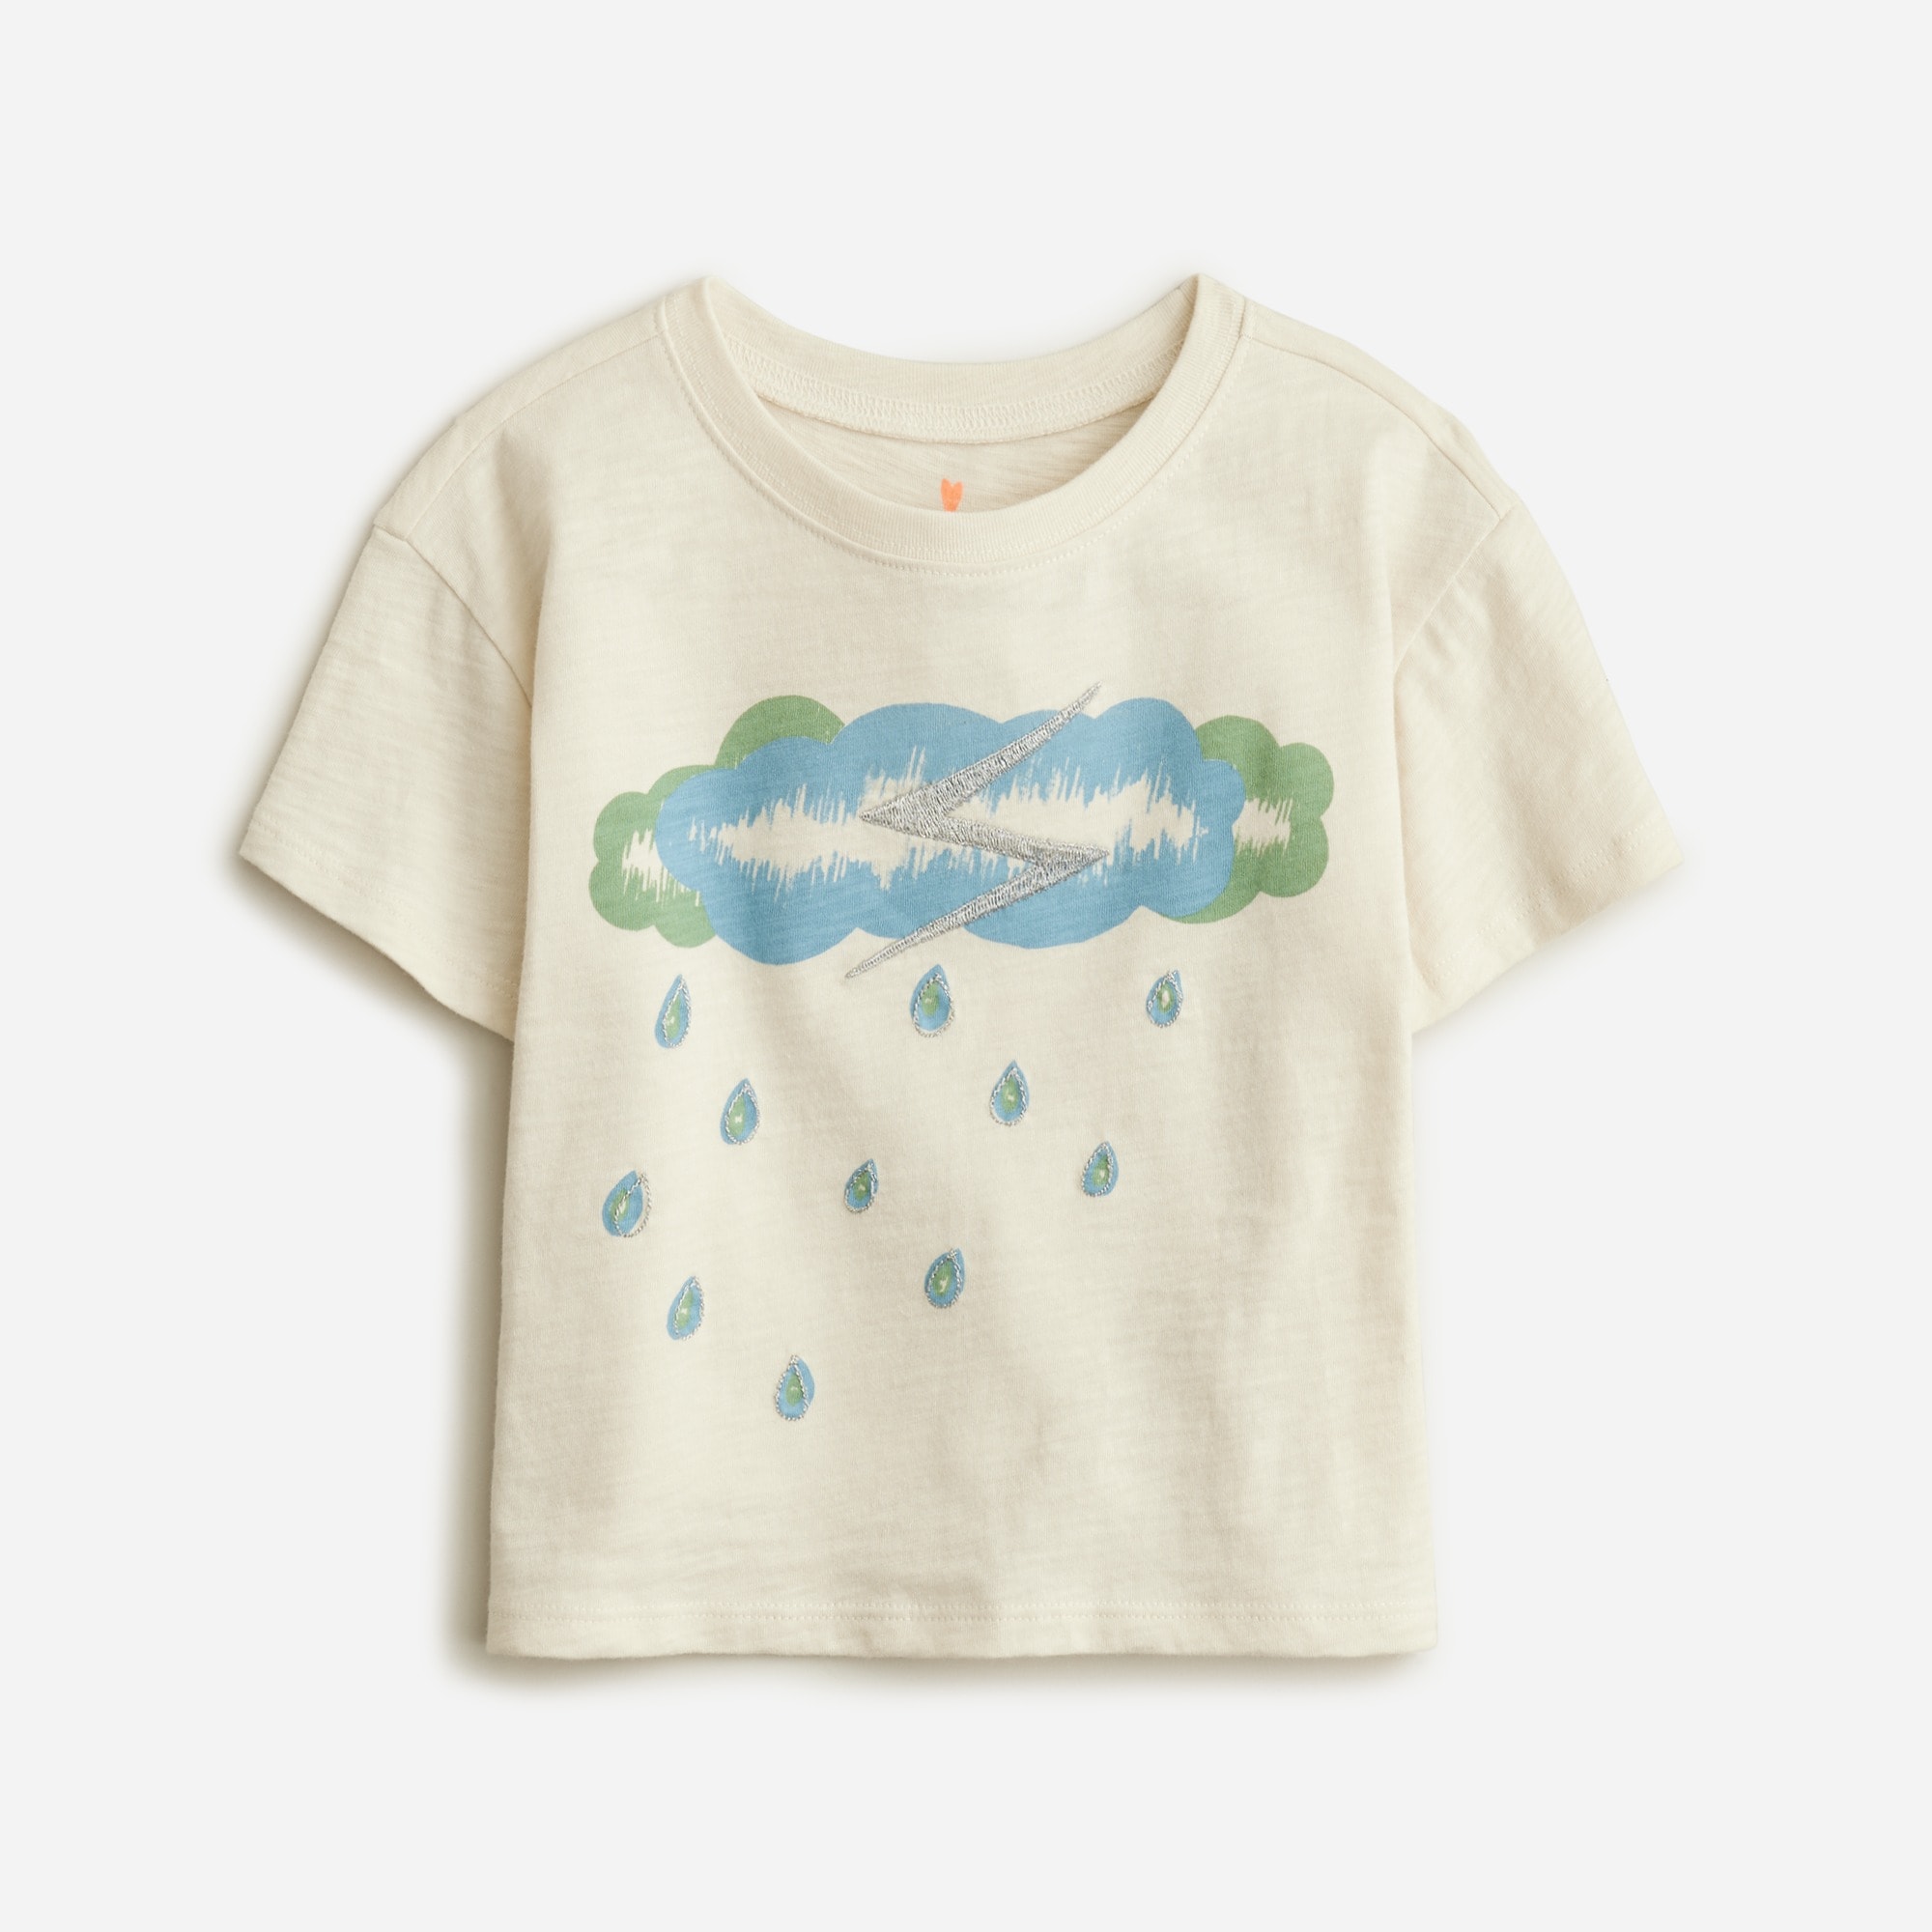  Girls' cropped sun and rain graphic T-shirt